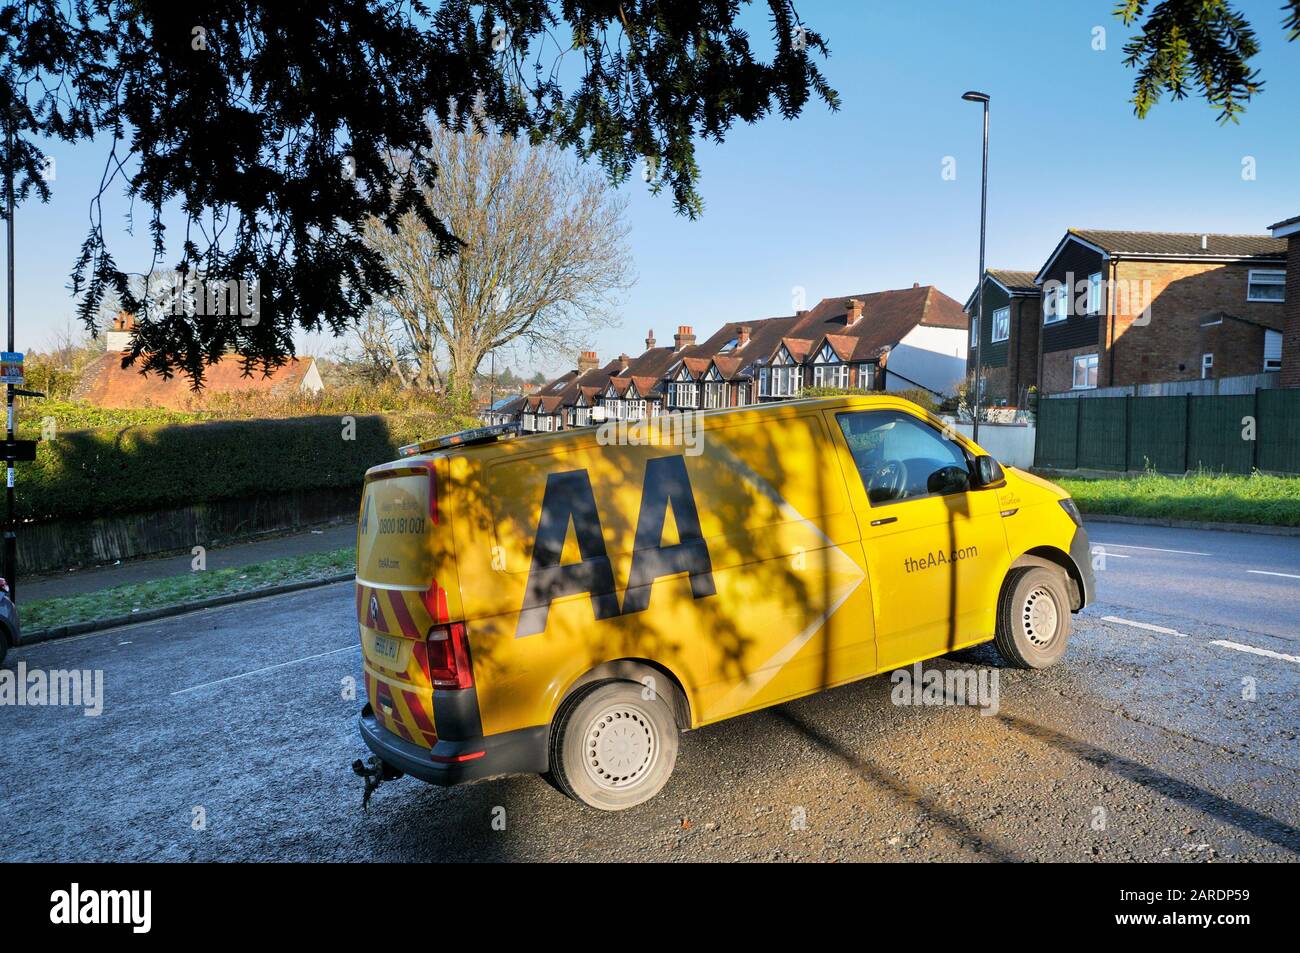 AA van in a suburban street, England, UK Stock Photo